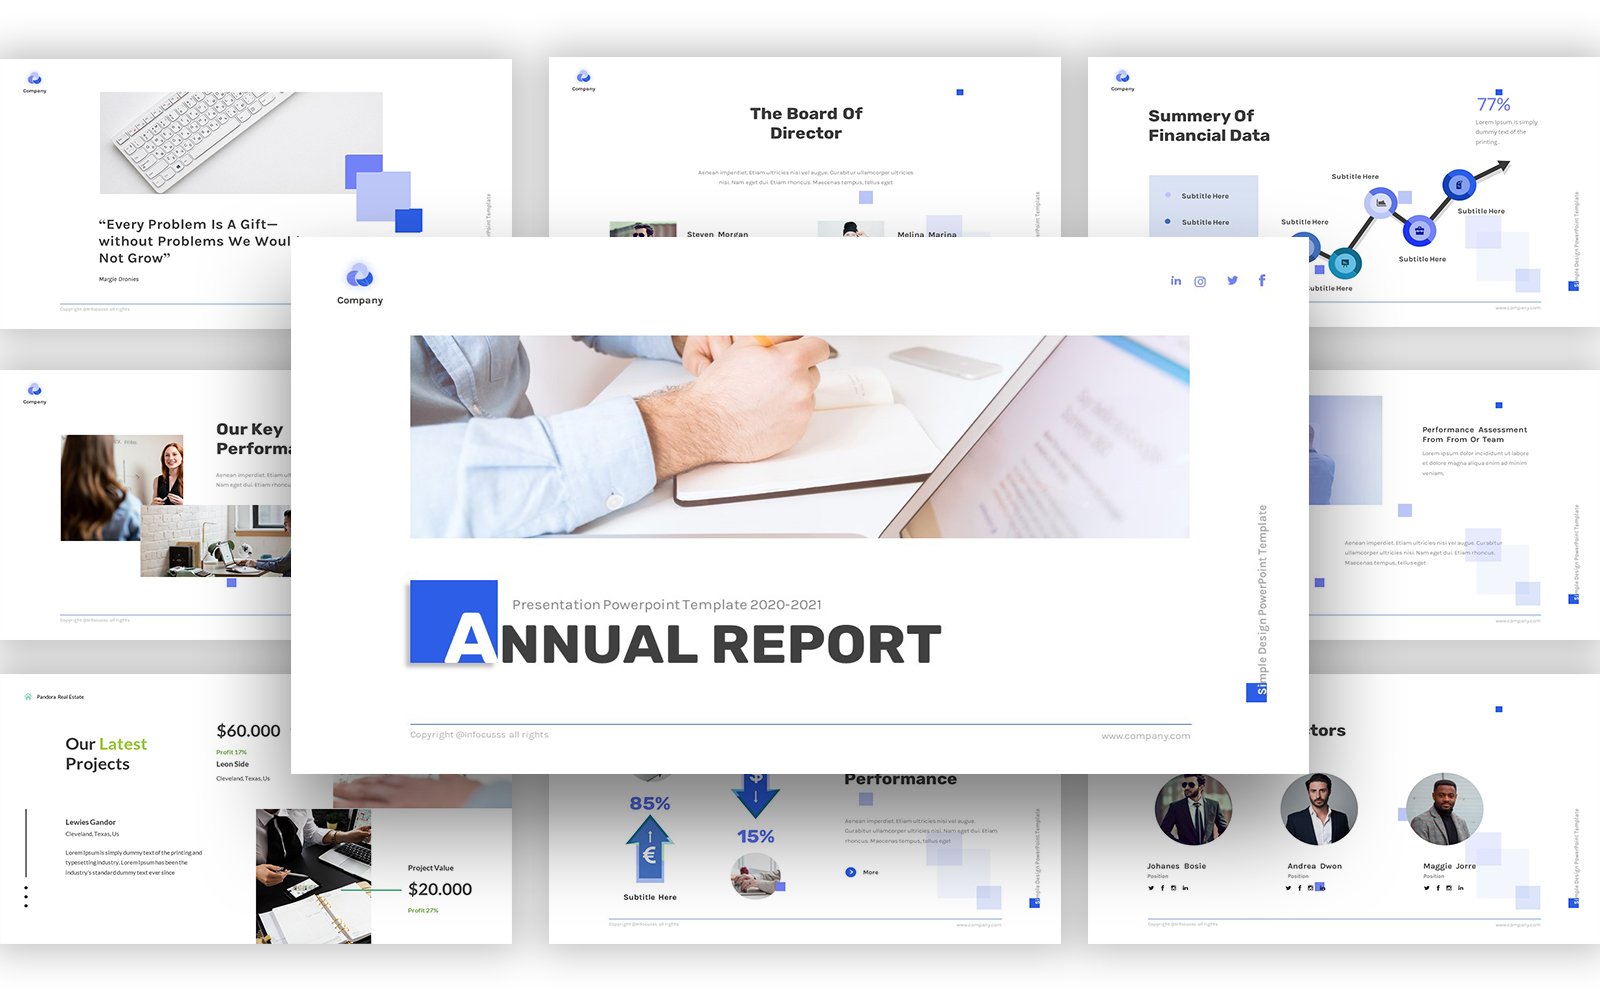 Minimaslist - Annual Report Presentation Powerpoint Template